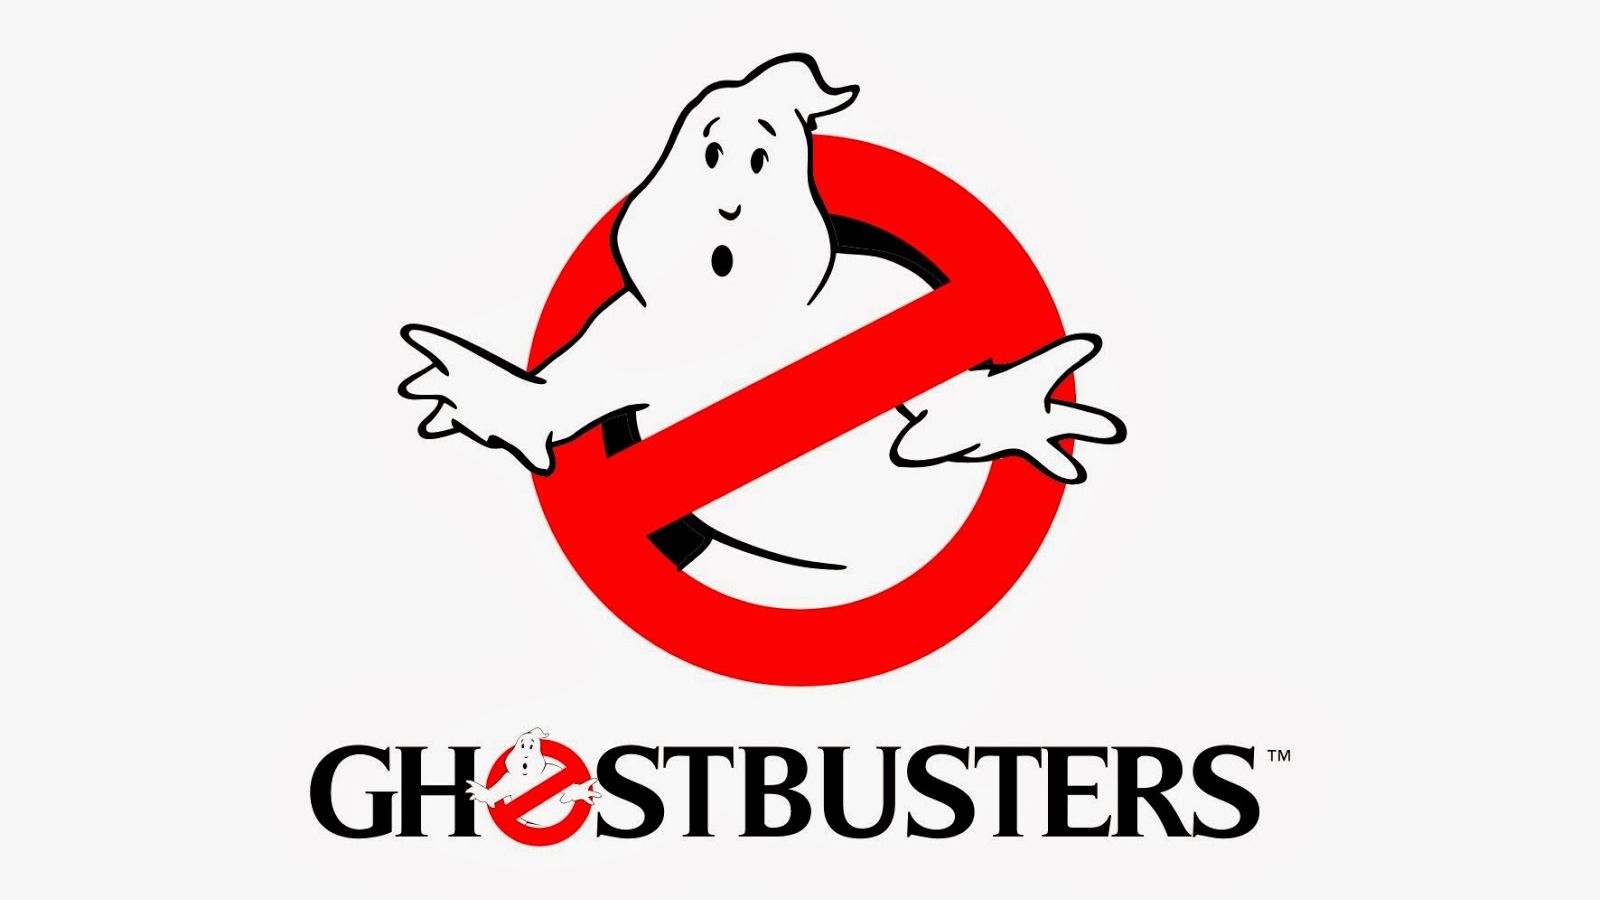 Ghostbusters HD wallpapers, Desktop wallpaper - most viewed